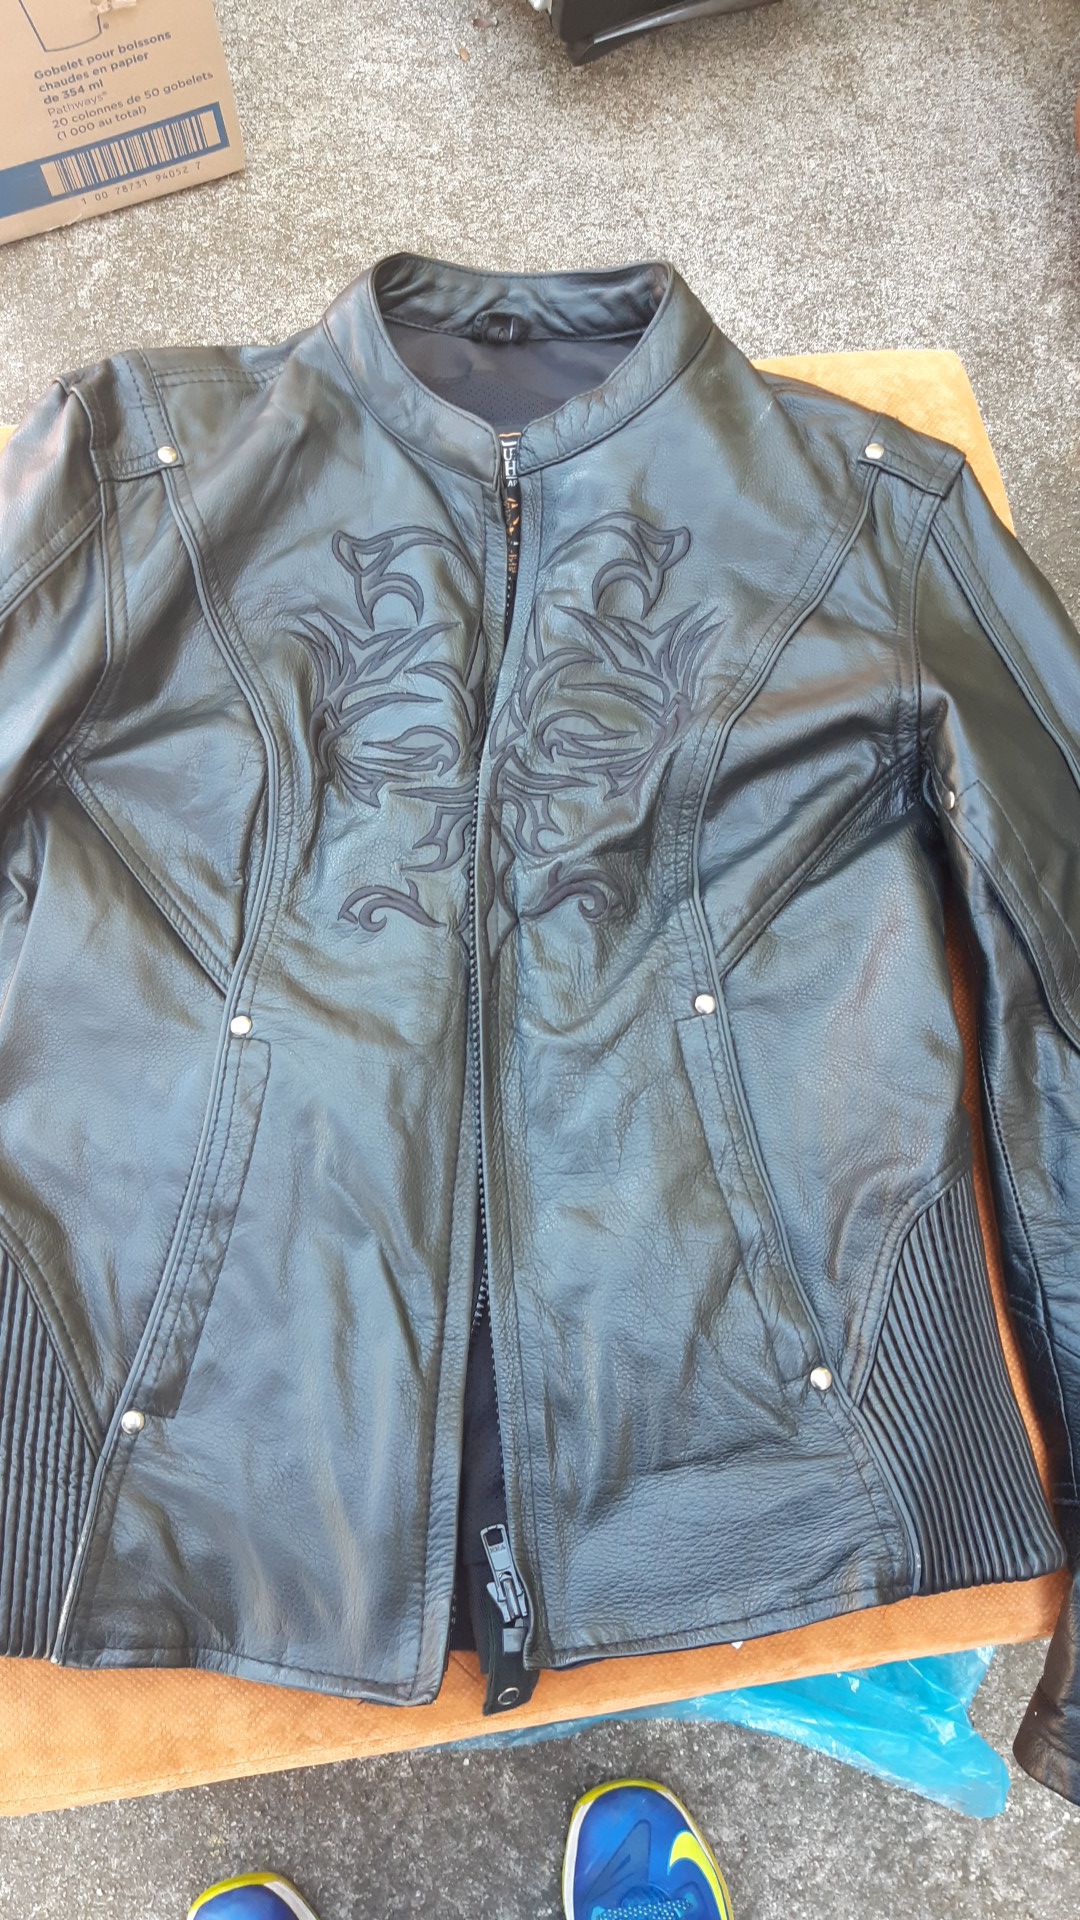 Women's leather motorcycle jacket